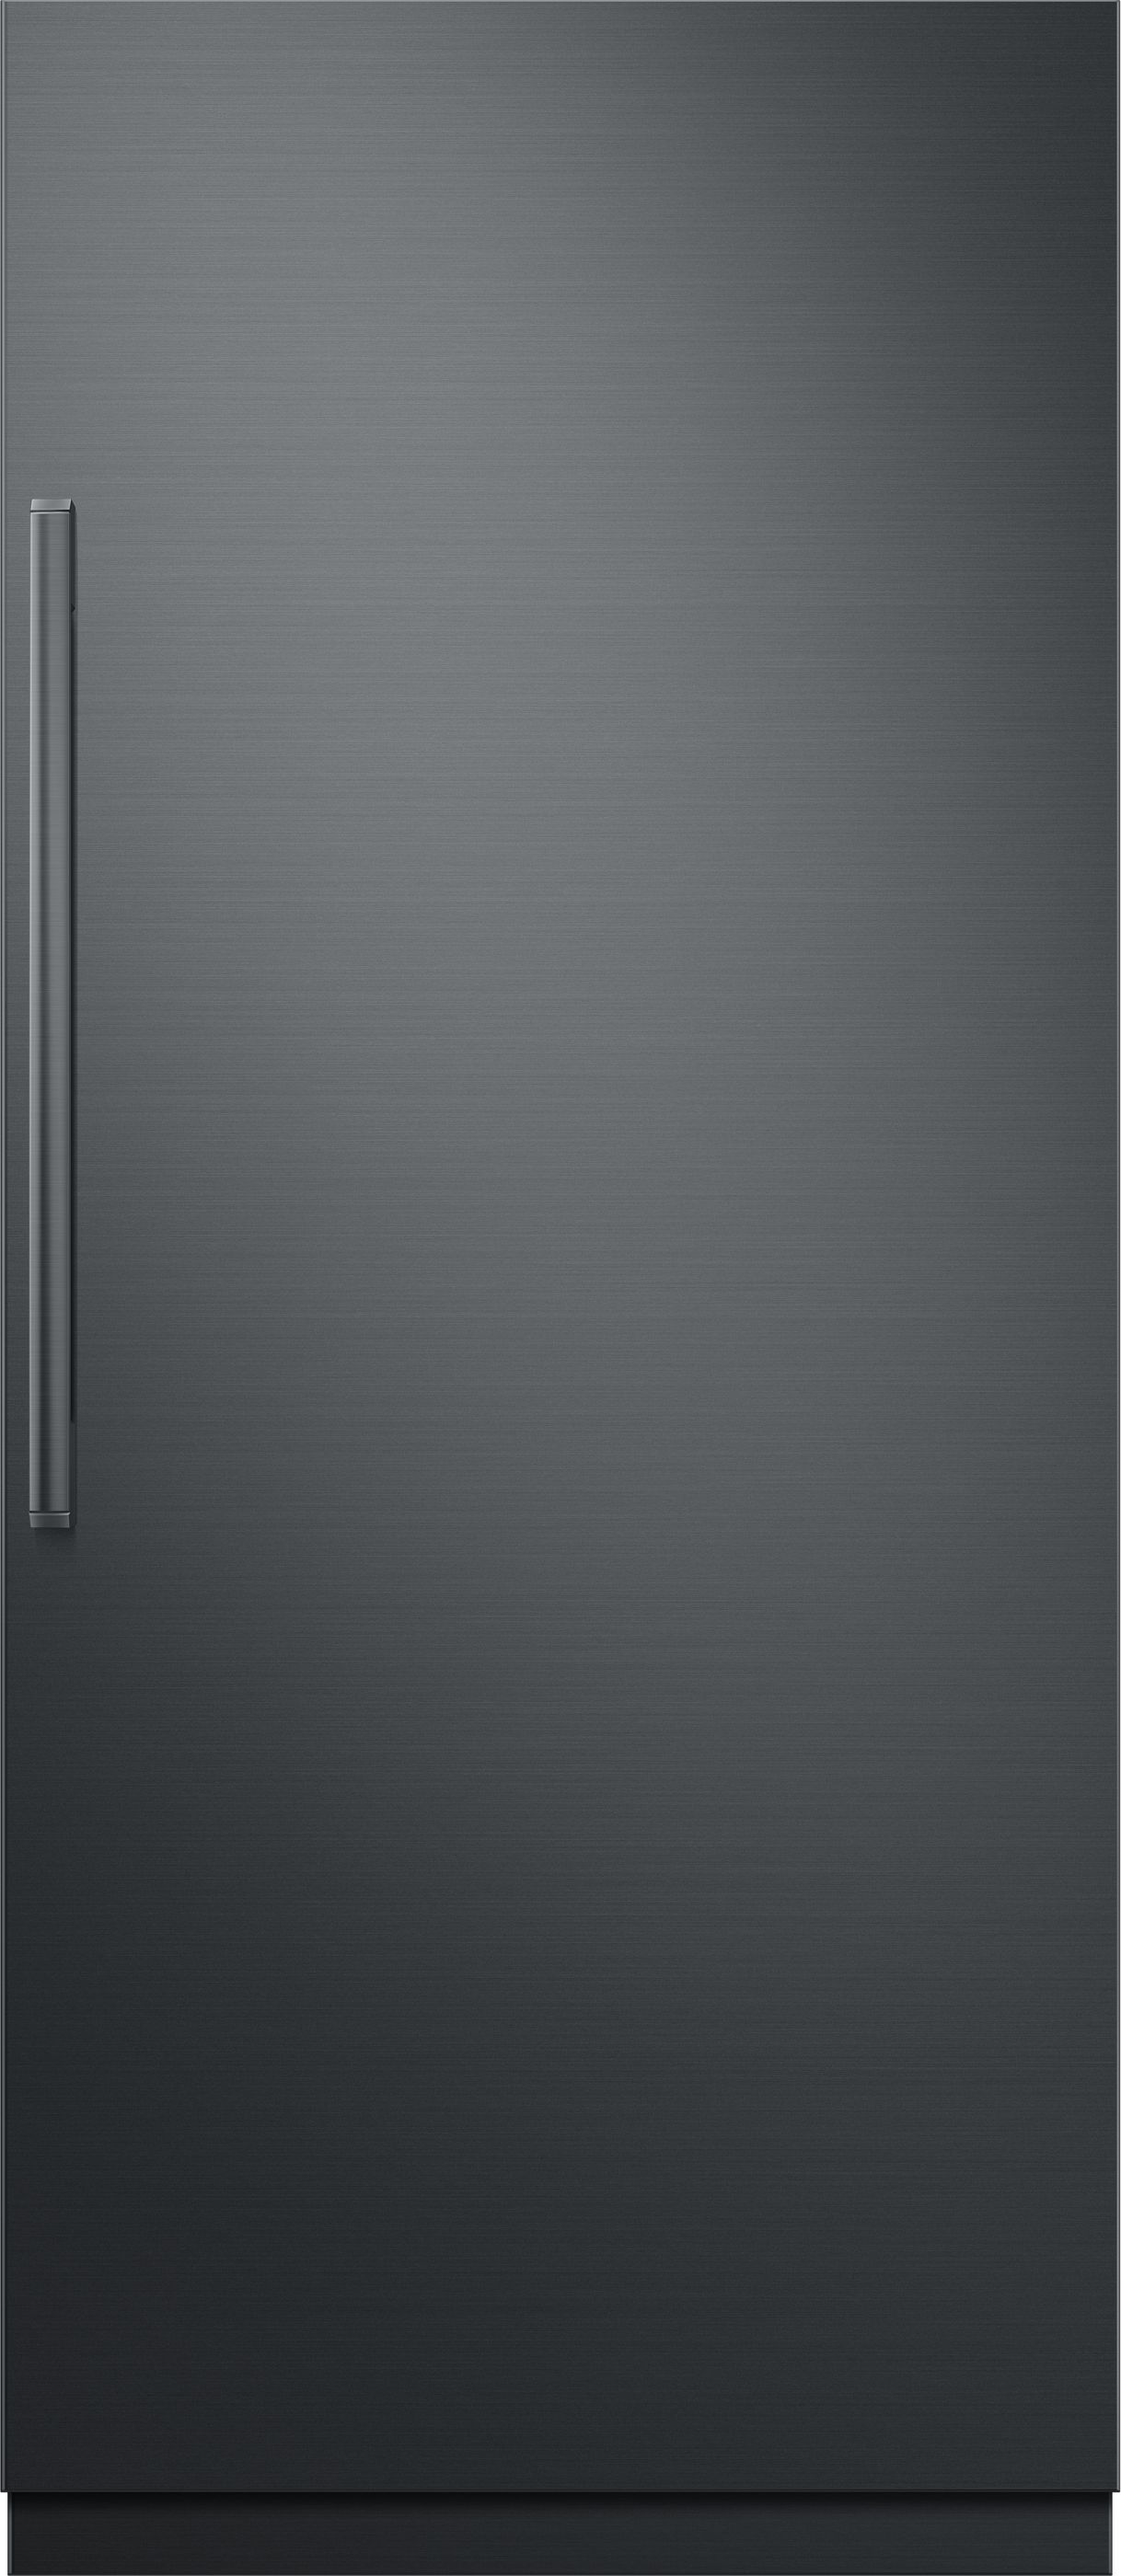 Dacor® Contemporary 21.6 Cu. Ft. Panel Ready All Refrigerator Column